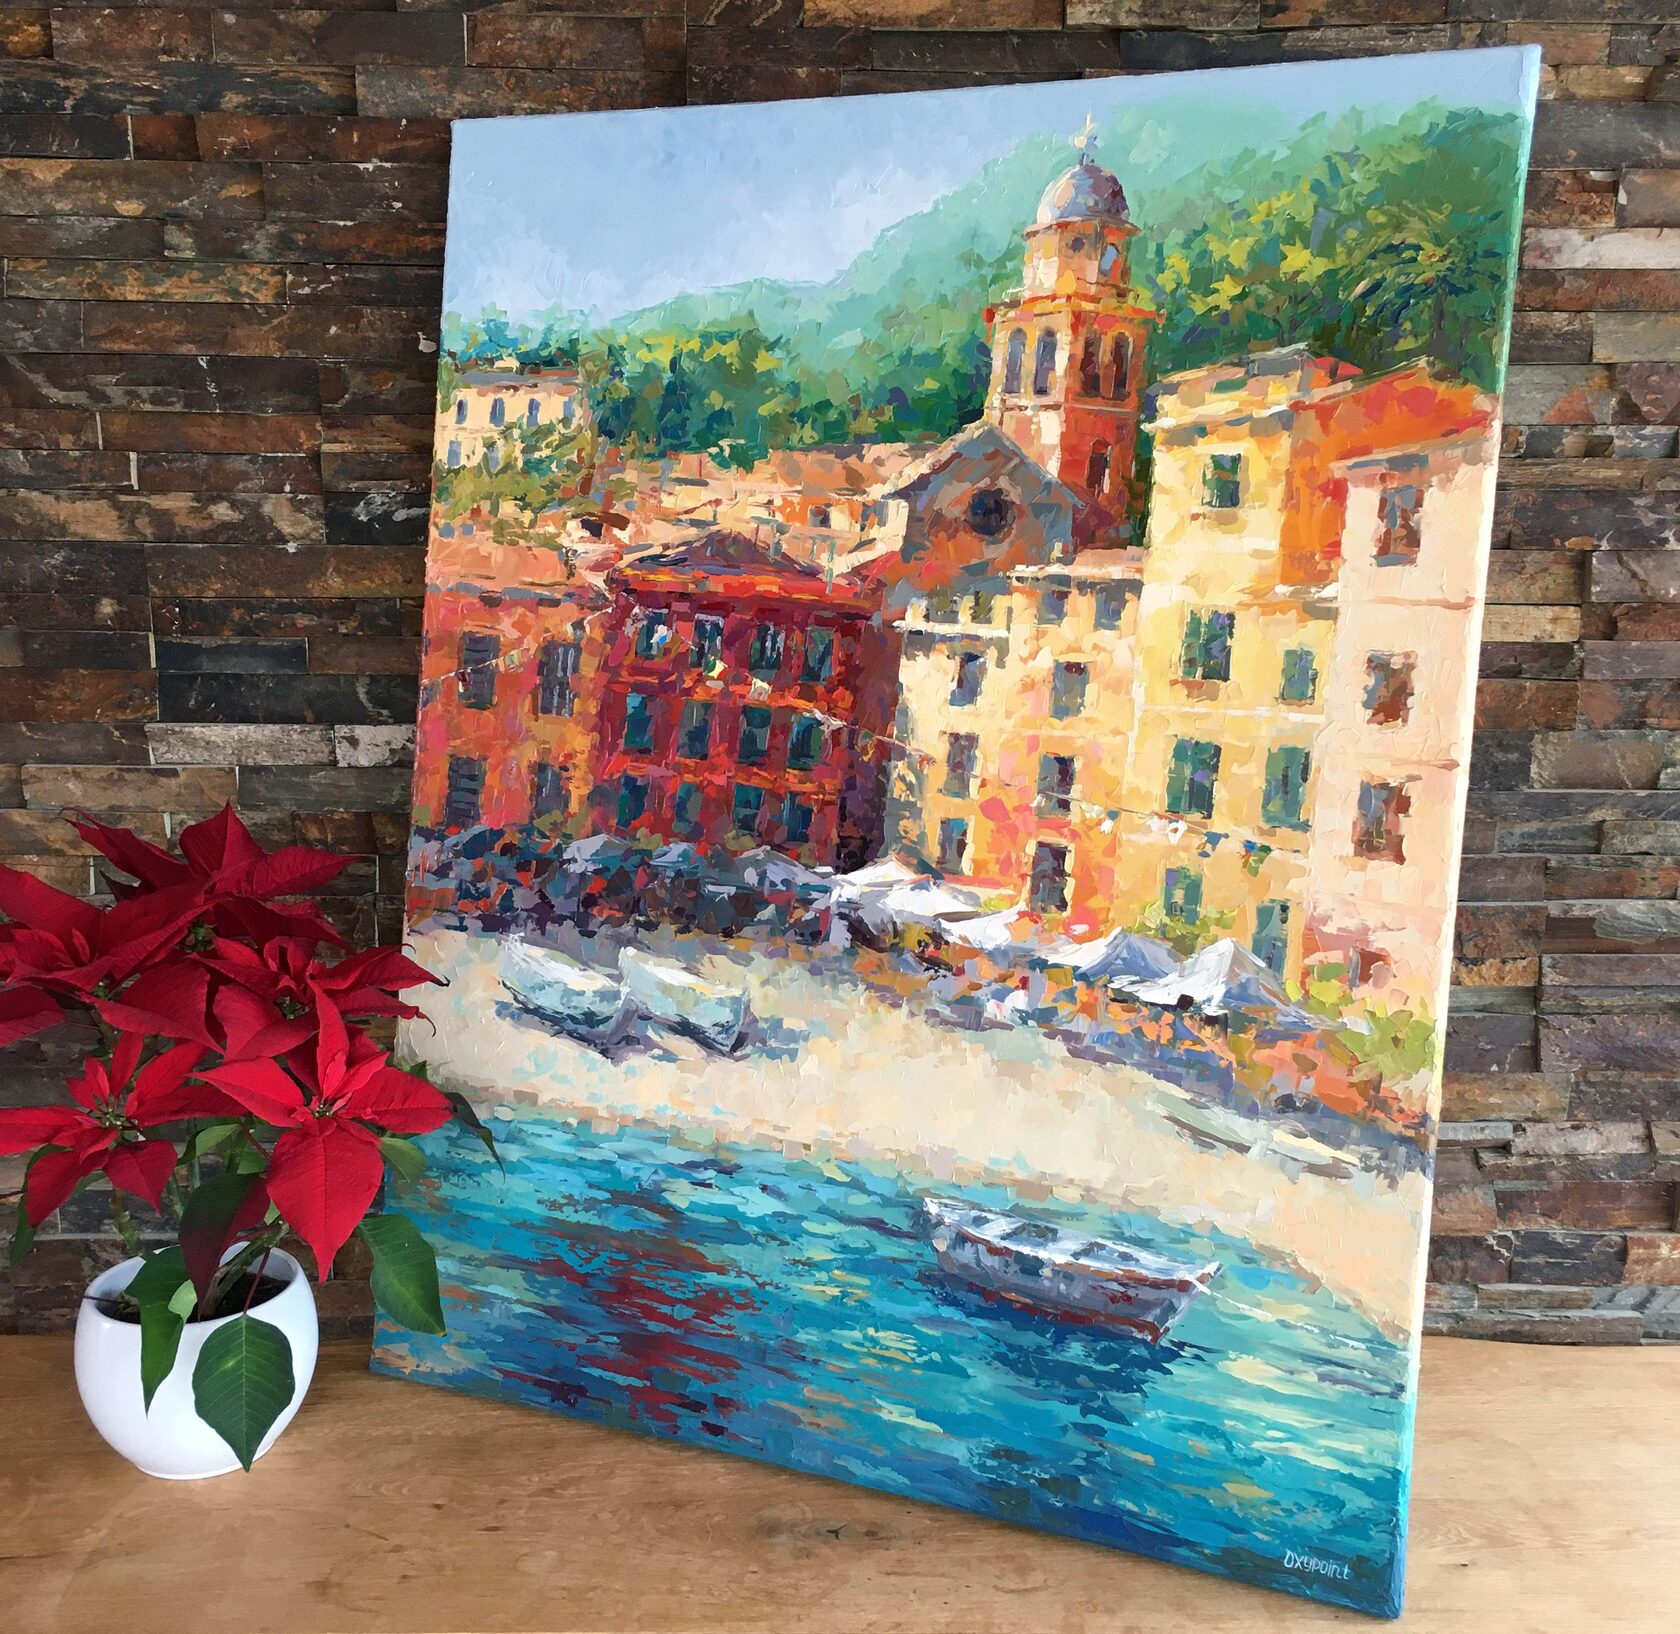 Portofino oil painting, sea abstract art, large painting Italian Riviera, knife painting, artist OXYPOINT Oxana Kravtsova, painting for sale 